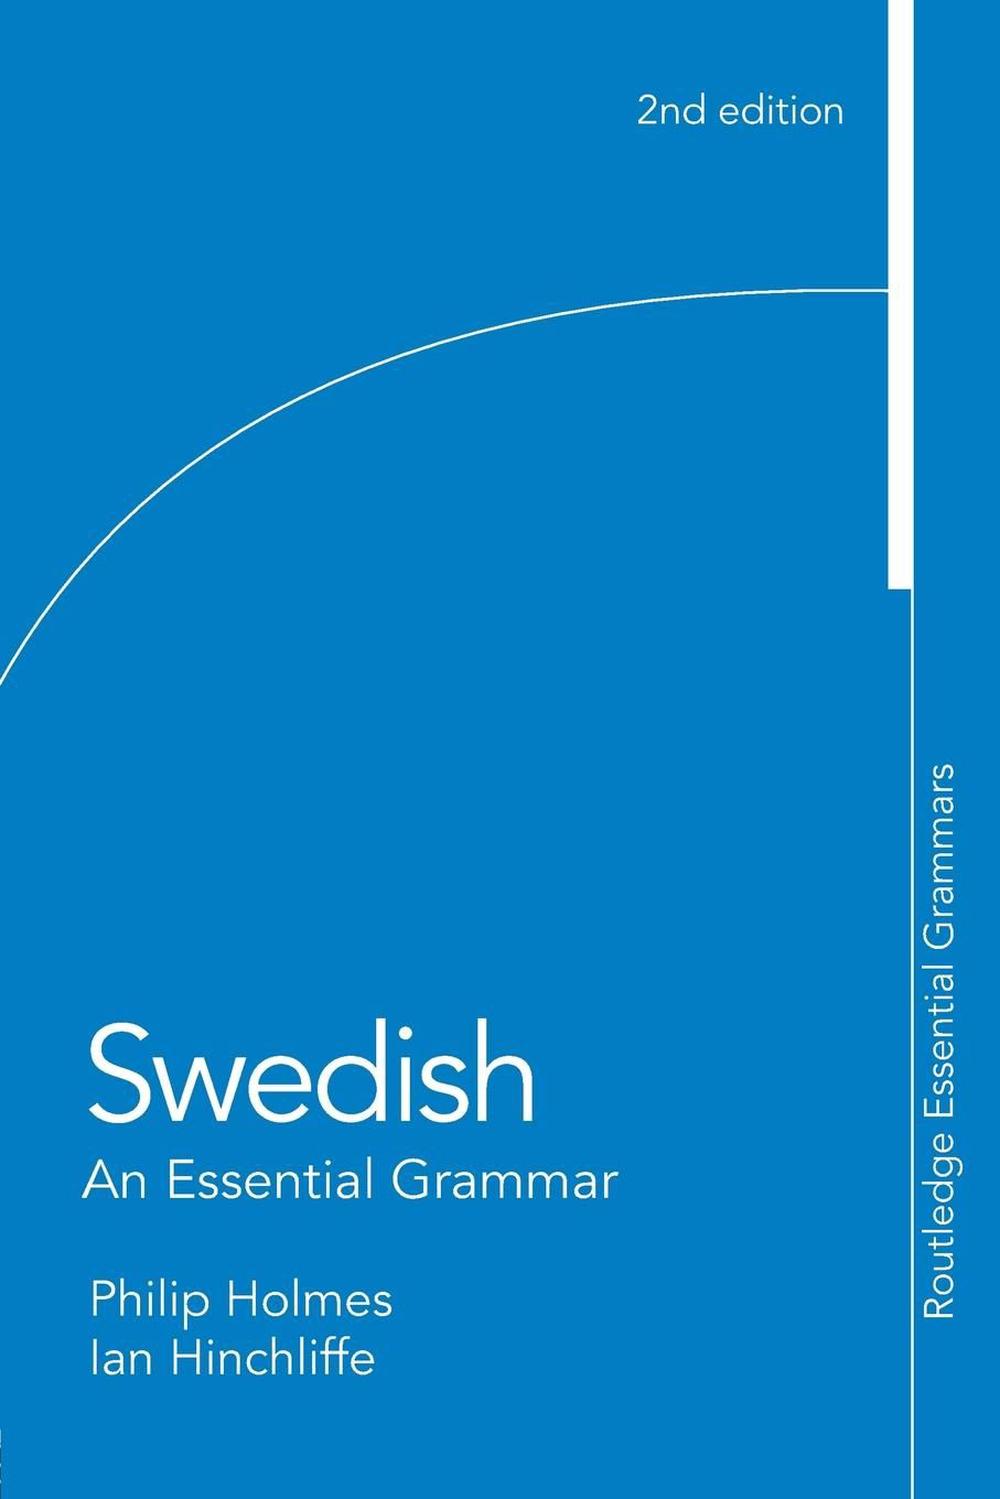 Swedish An Essential Grammar by Philip Holmes (English) Paperback Book